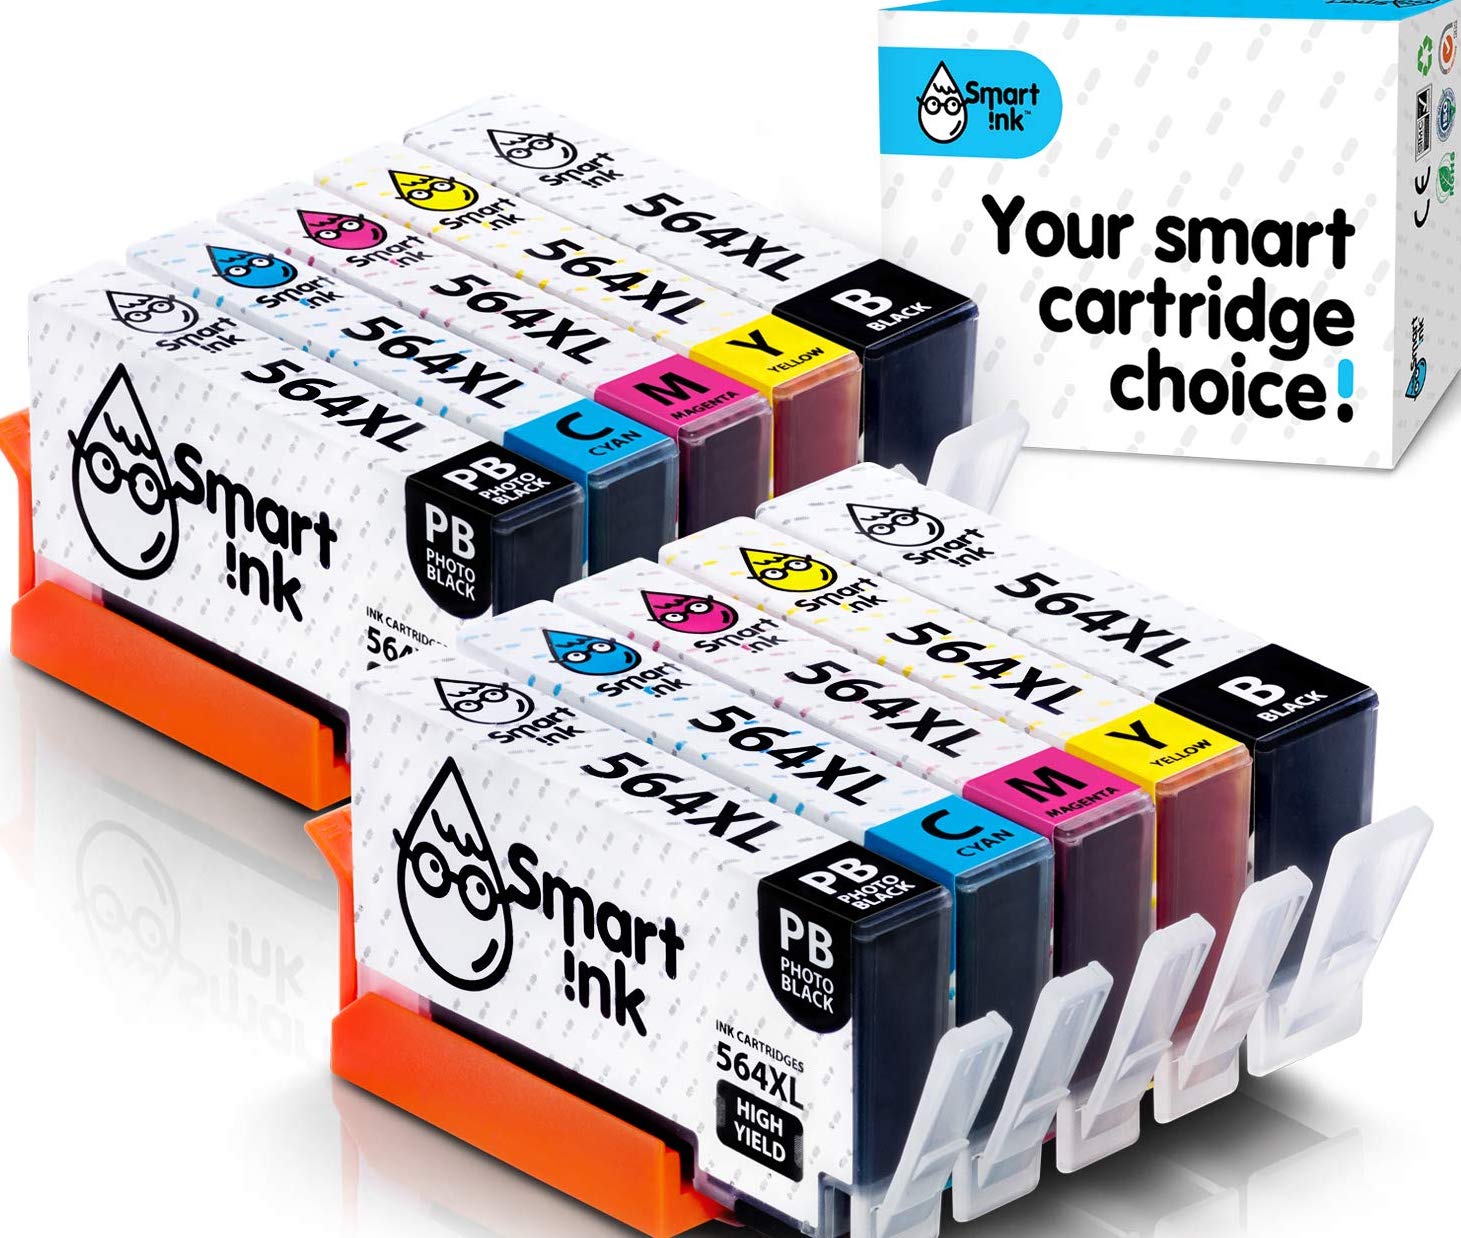 Smart Ink cartridges